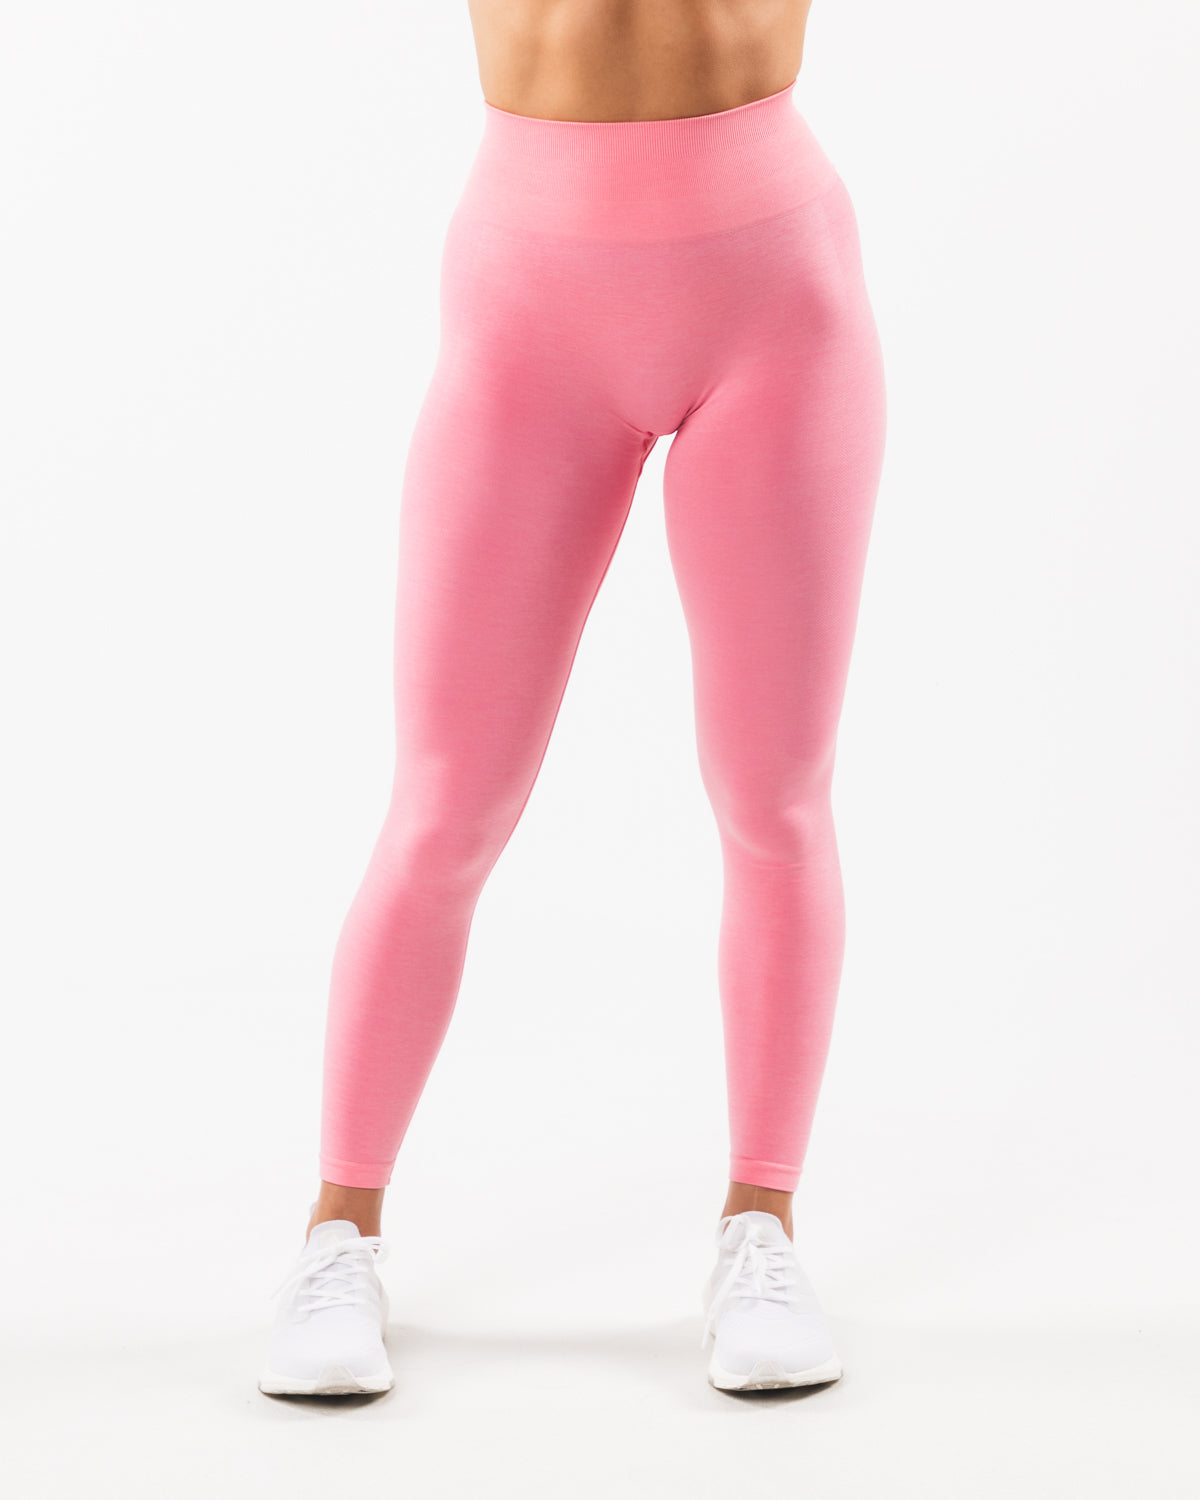 Alphalete pink leggings - Gem